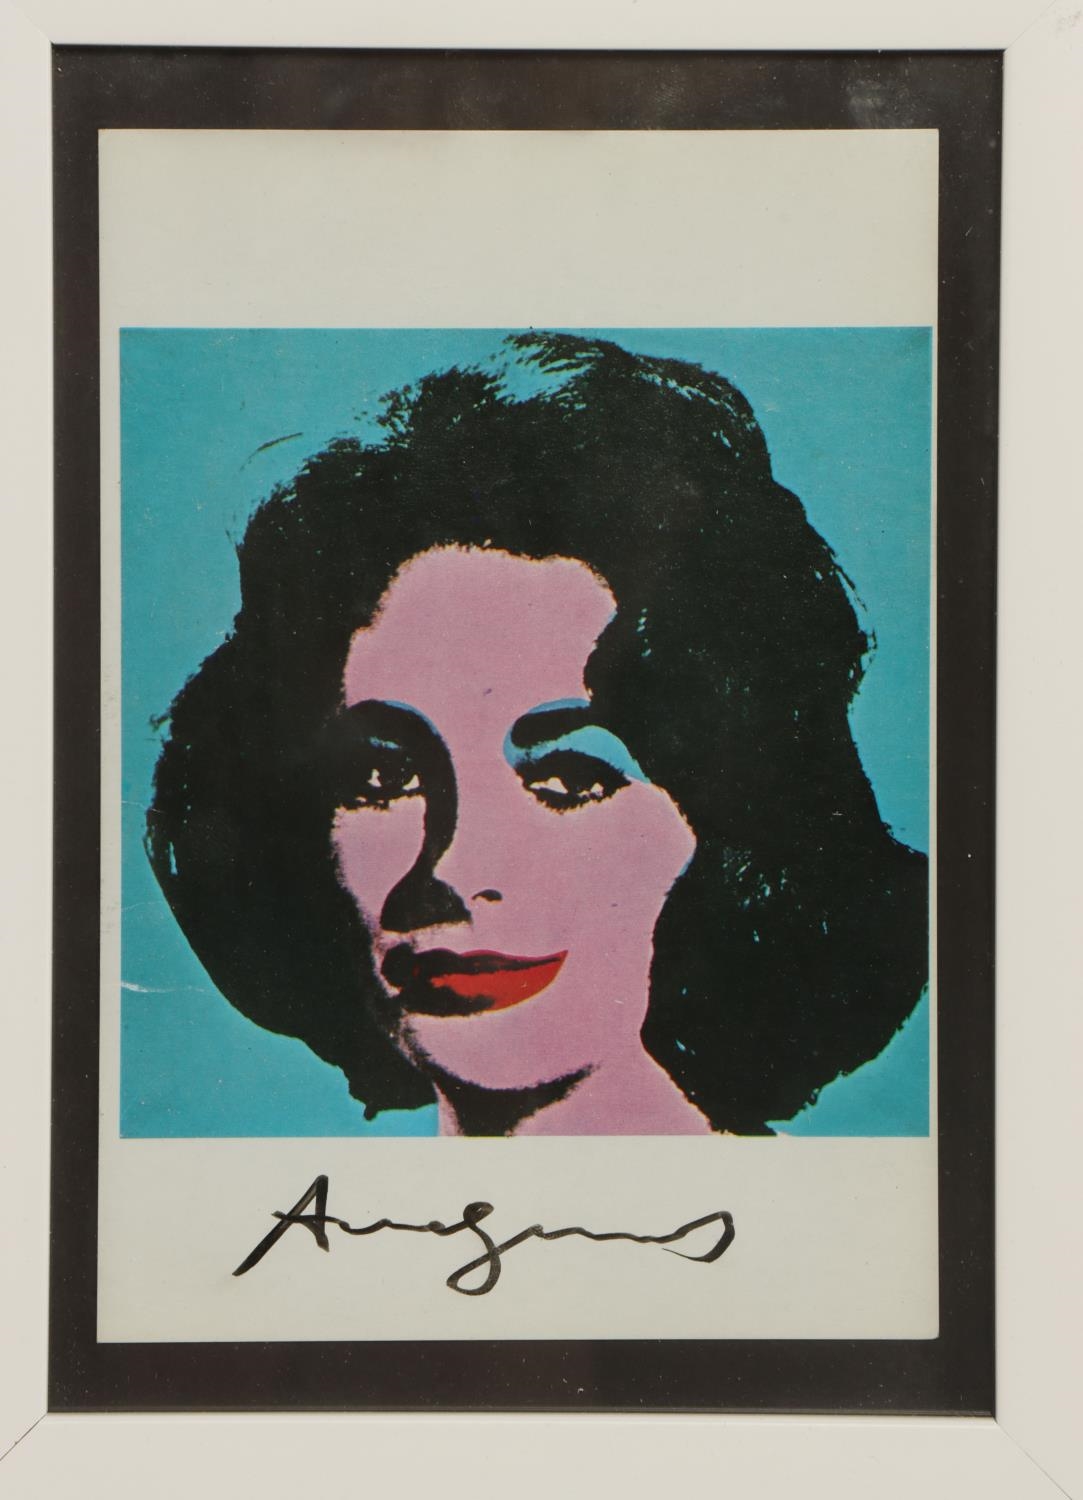 Artwork by Andy Warhol, Elizabeth Taylor, Made of Silk screen print